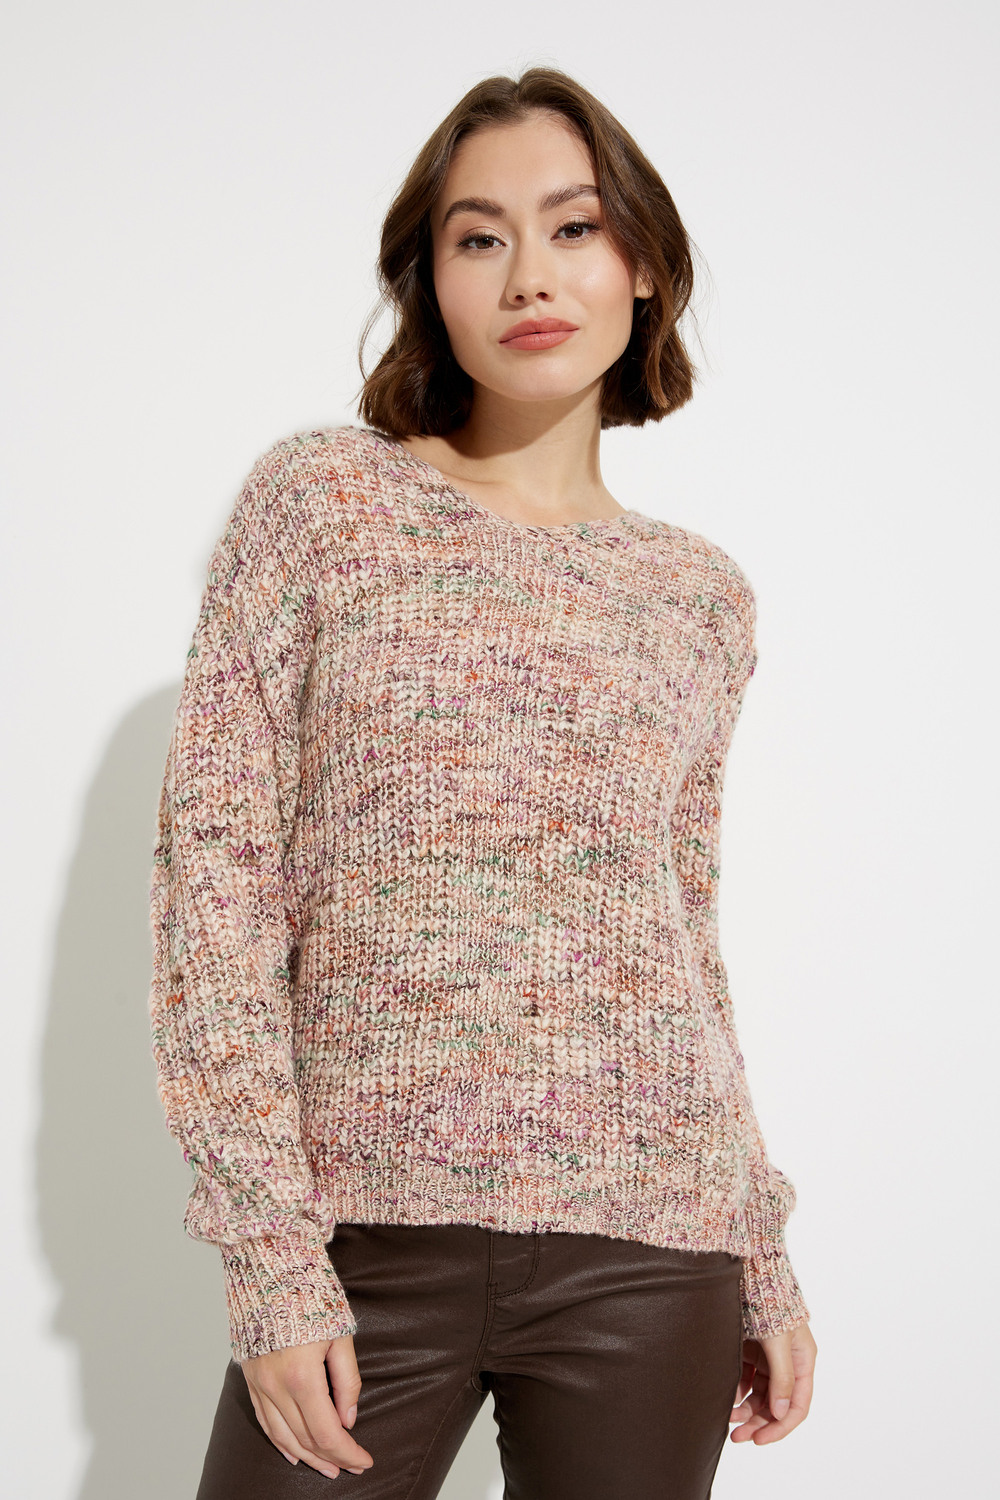 Space Dye V-Neck Sweater Style C2344. Woodrose